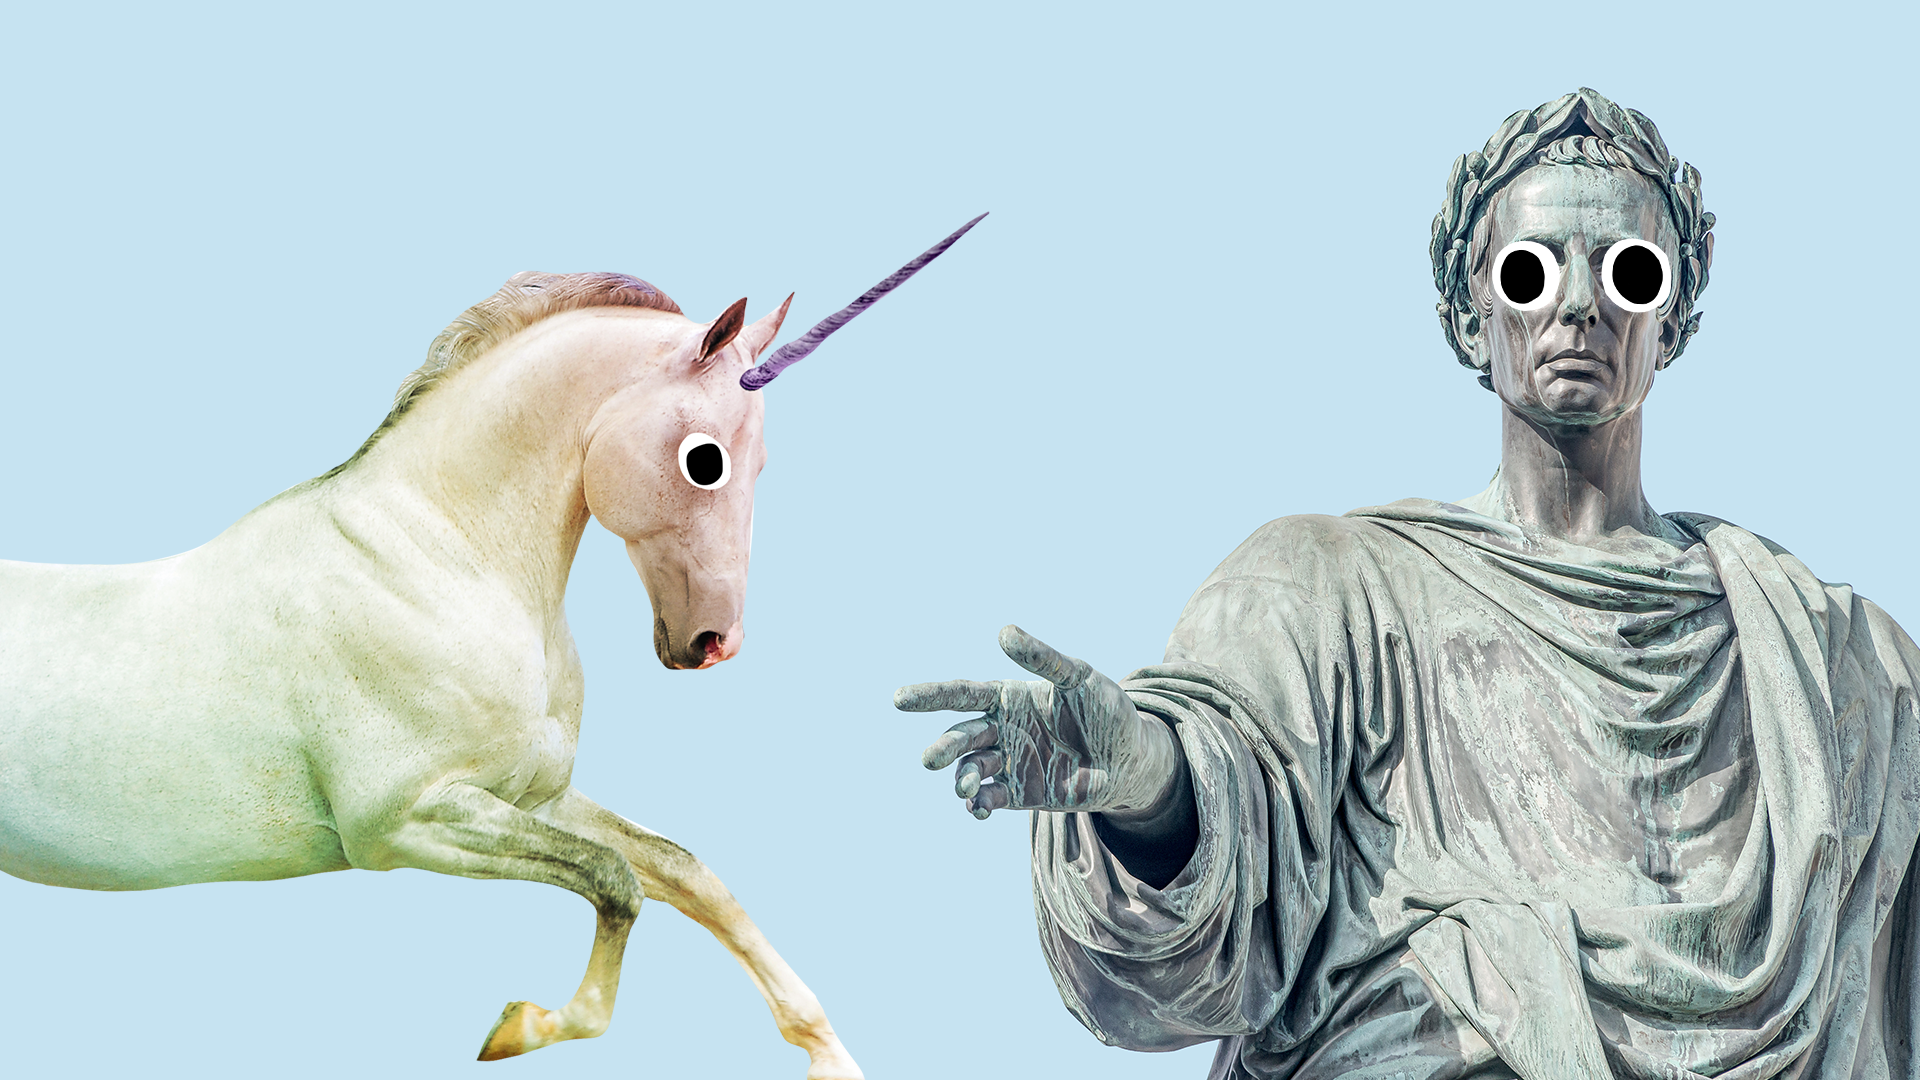 Roman statue with unicorn